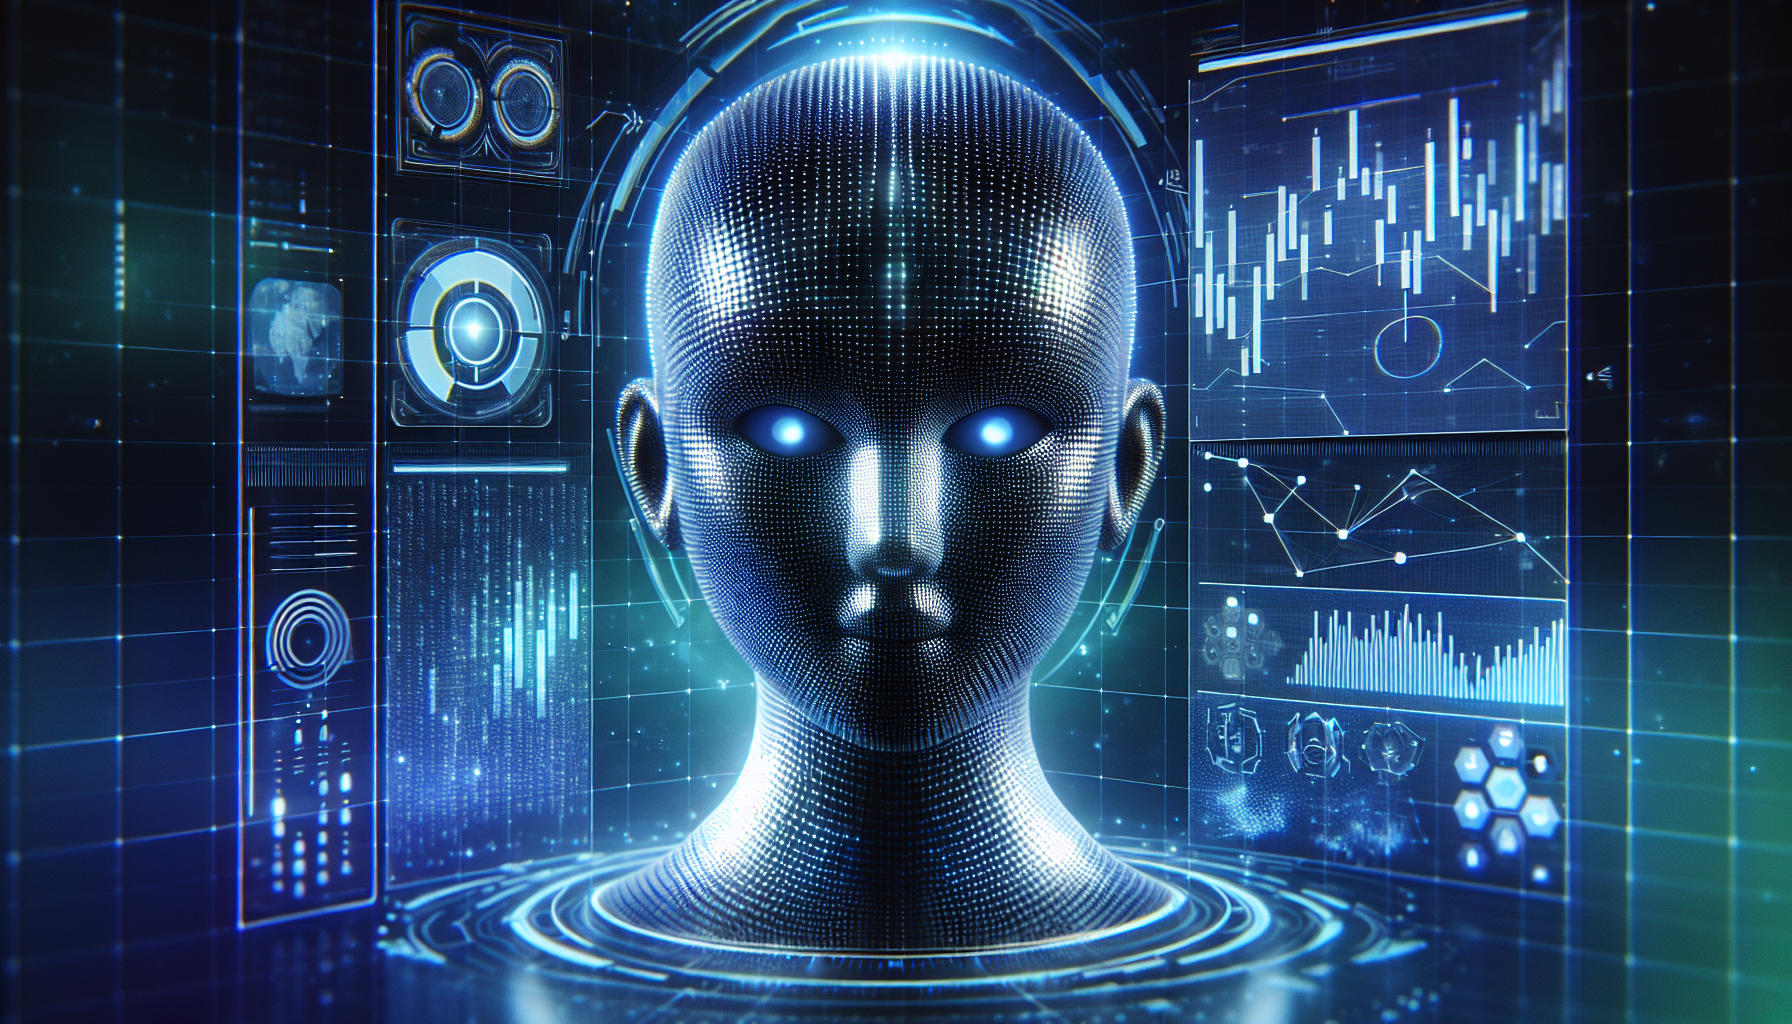 Illustration of a futuristic virtual assistant